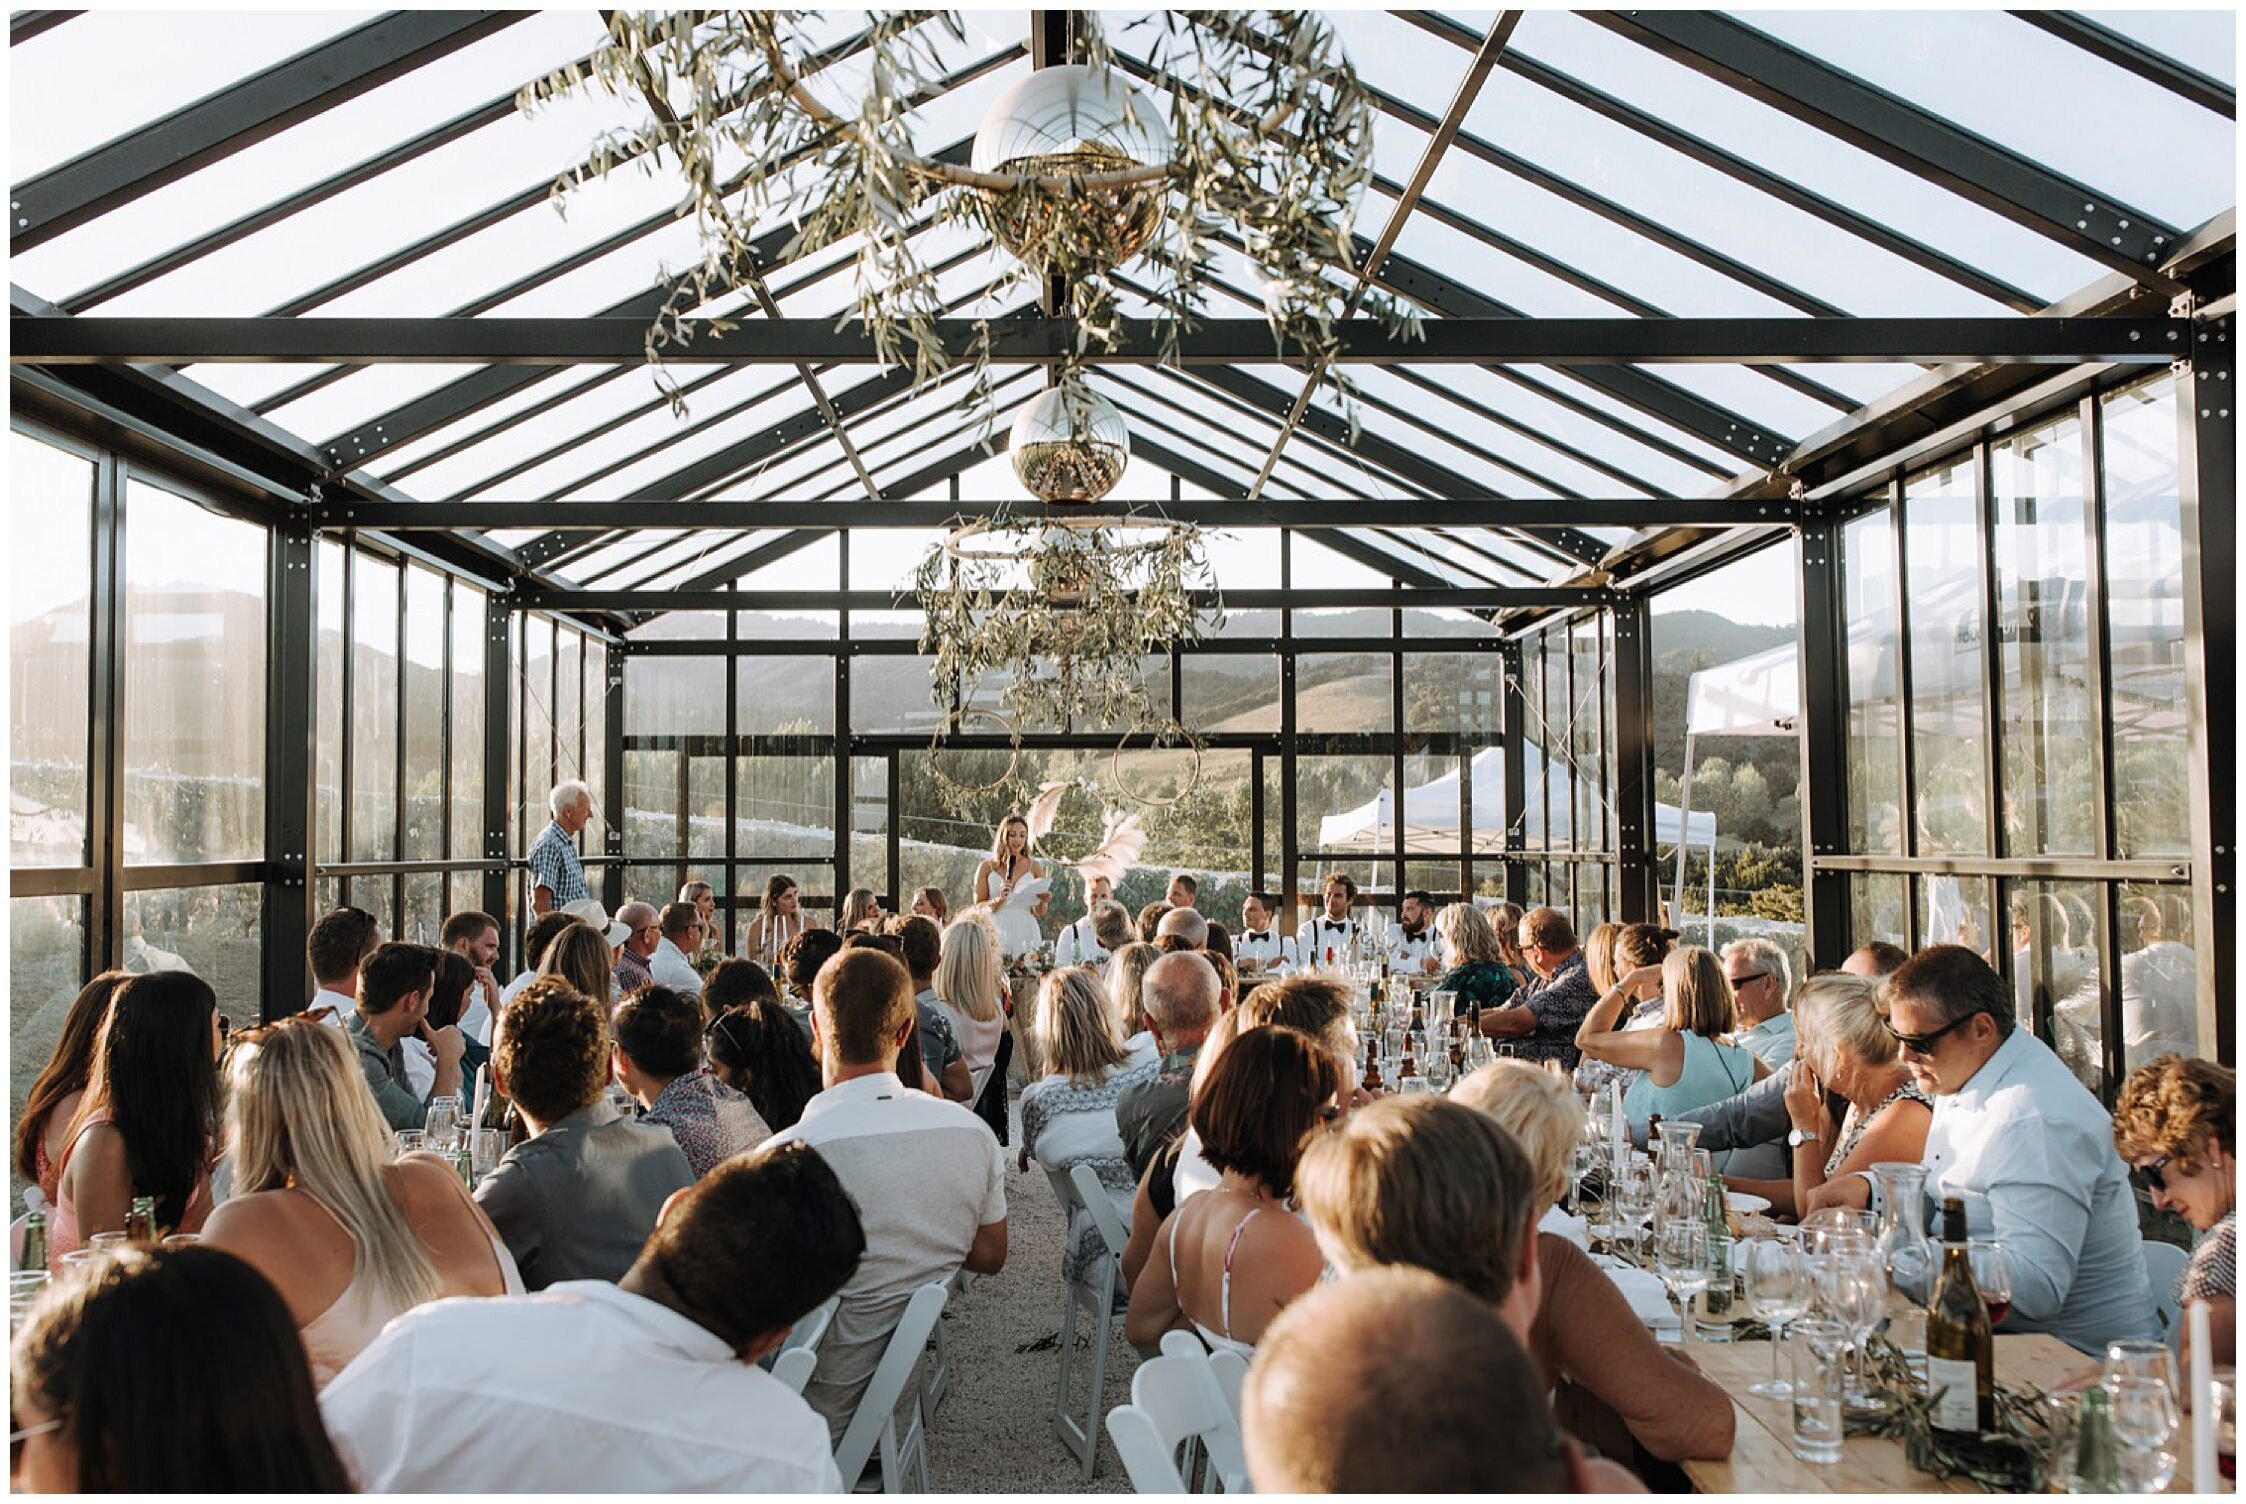 Zanda+Auckland+wedding+photographer+boho+retro+suspenders+groom+denim+jacket+bride+Te+Whai+Bay+Wines+venue+bright+glass+house+vineyard+photoshoot+New+Zealand_34.jpeg